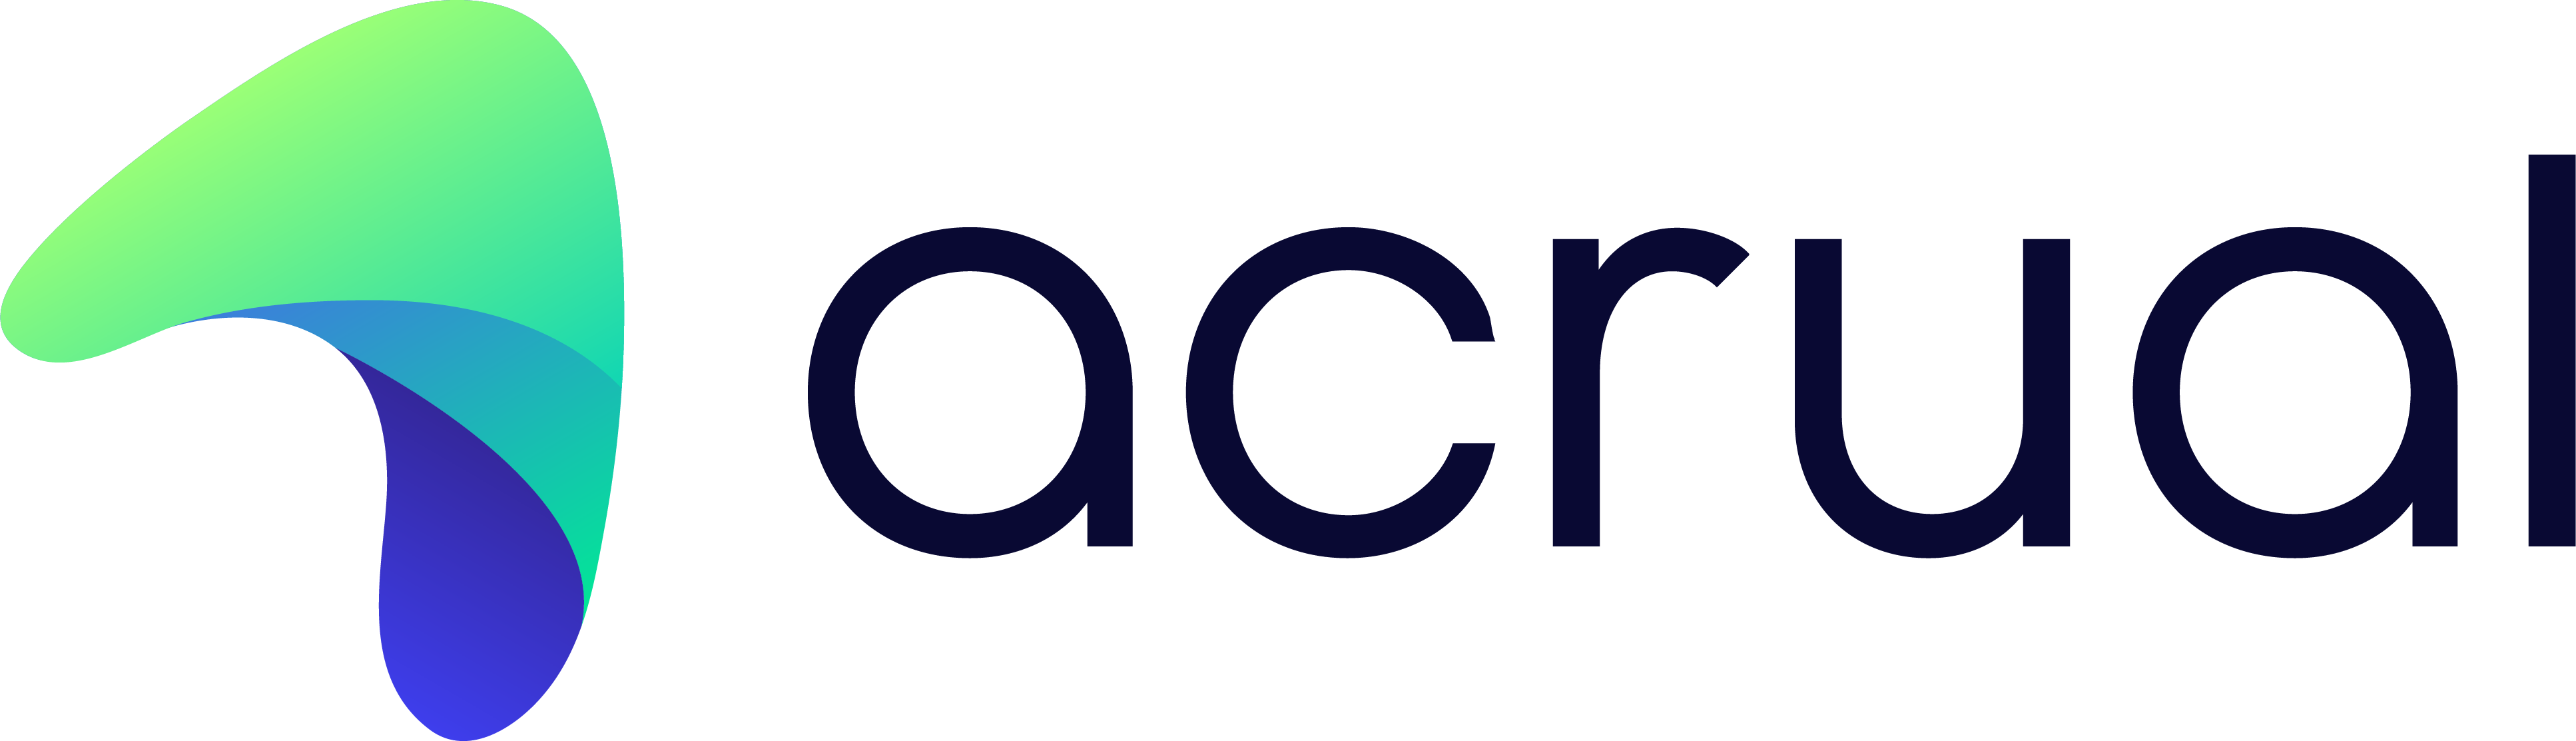 The new Acrual logo